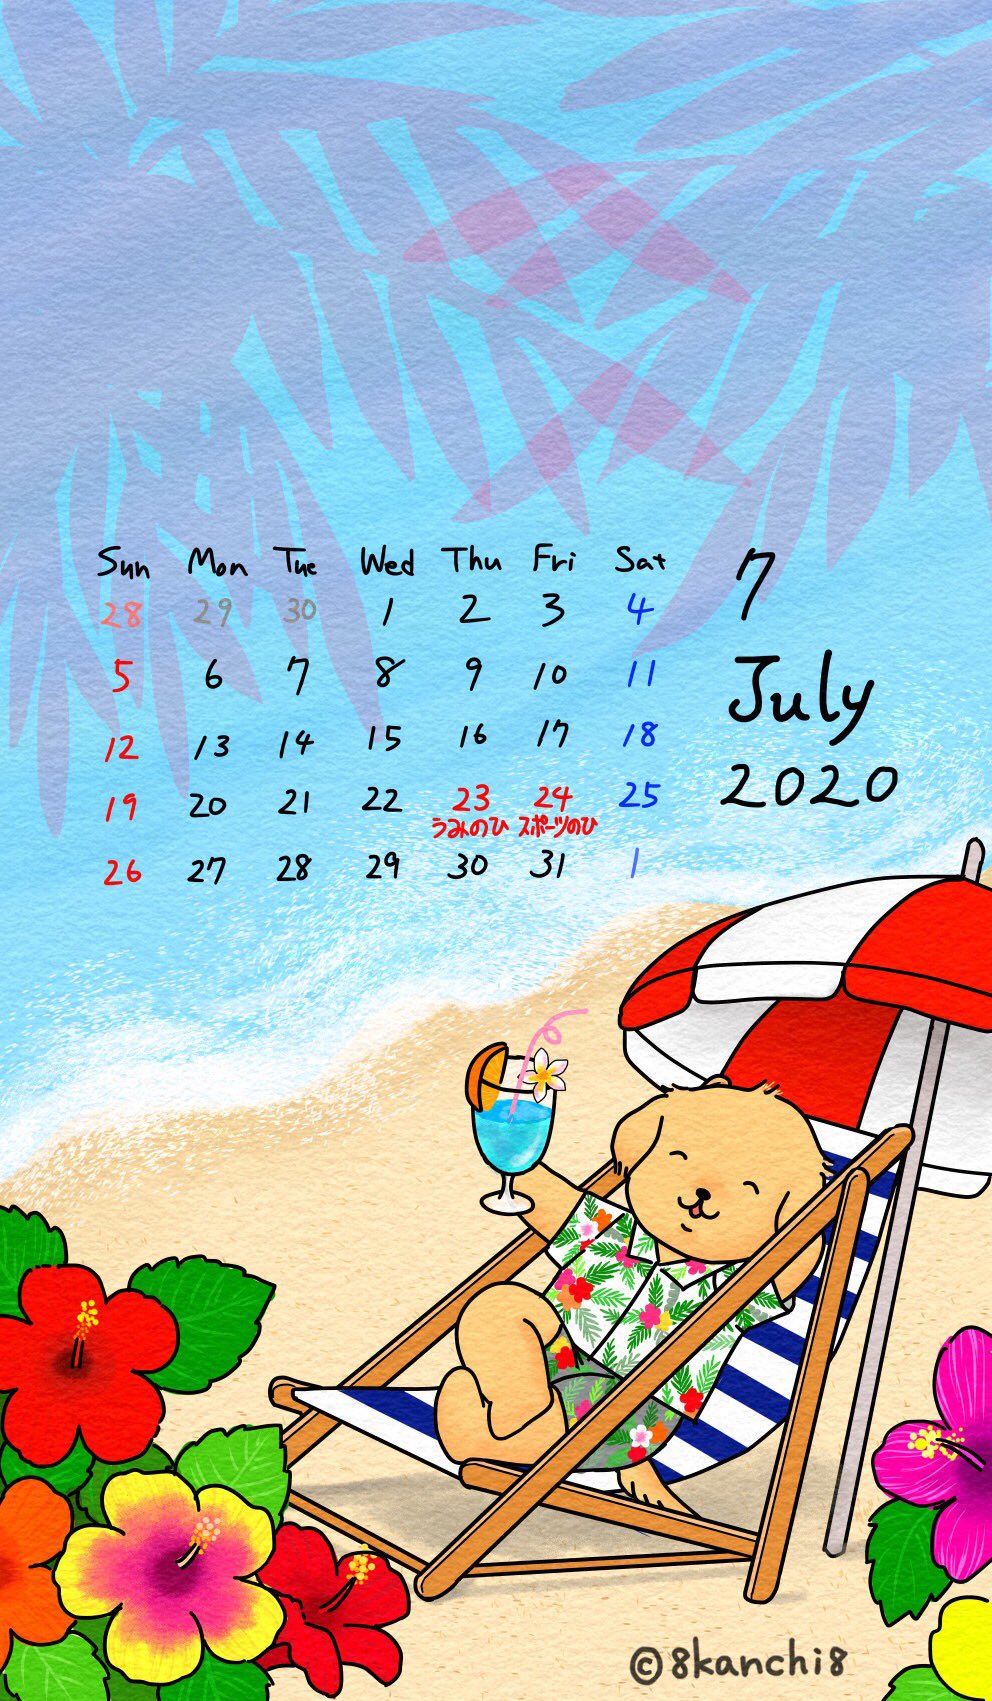 8kanchi8 かんち 7月のカレンダーができました アロハなごるち ごるち ゴールデンレトリバー ゴールデンレトリーバー 犬 犬のイラスト ゴールデンレトリバーのイラスト イラスト カレンダー カレンダー壁紙 7月カレンダー アロハ